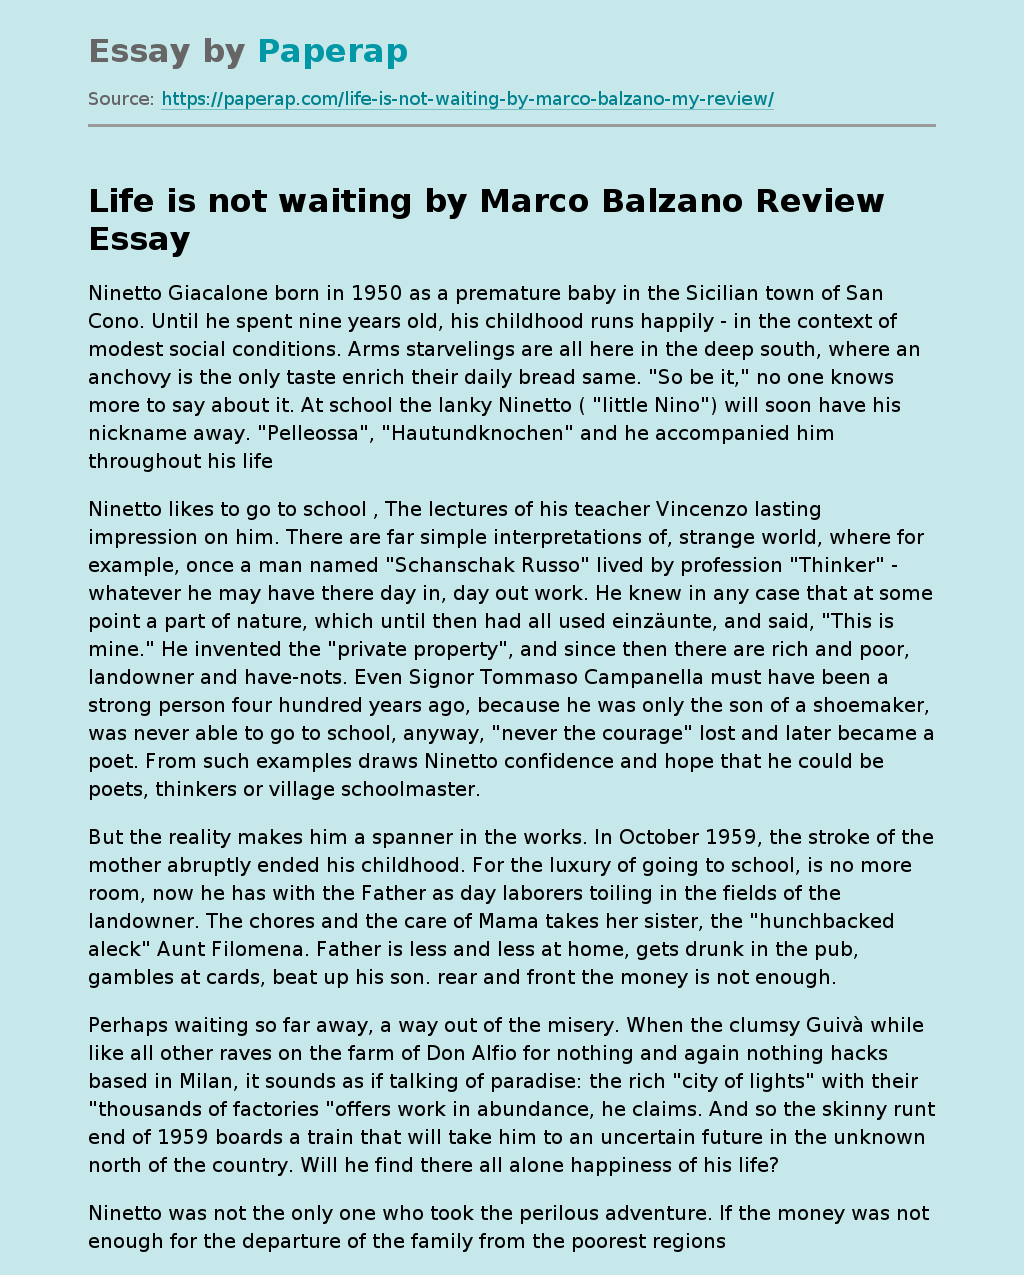 “Life Is Not Waiting” by Marco Balzano